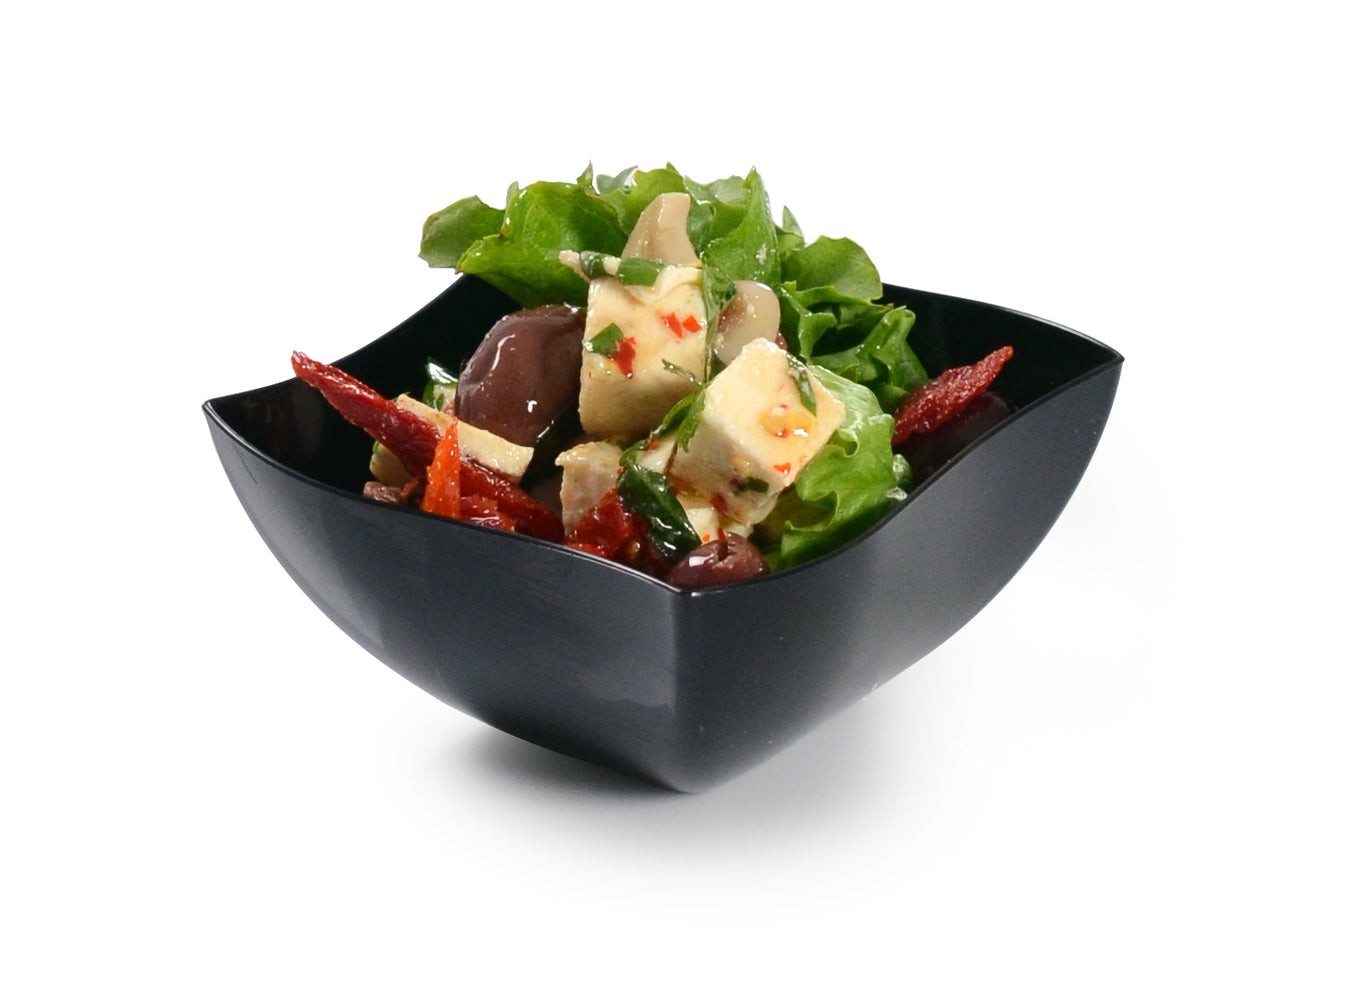 80 oz Black Salad Bowls With Lids